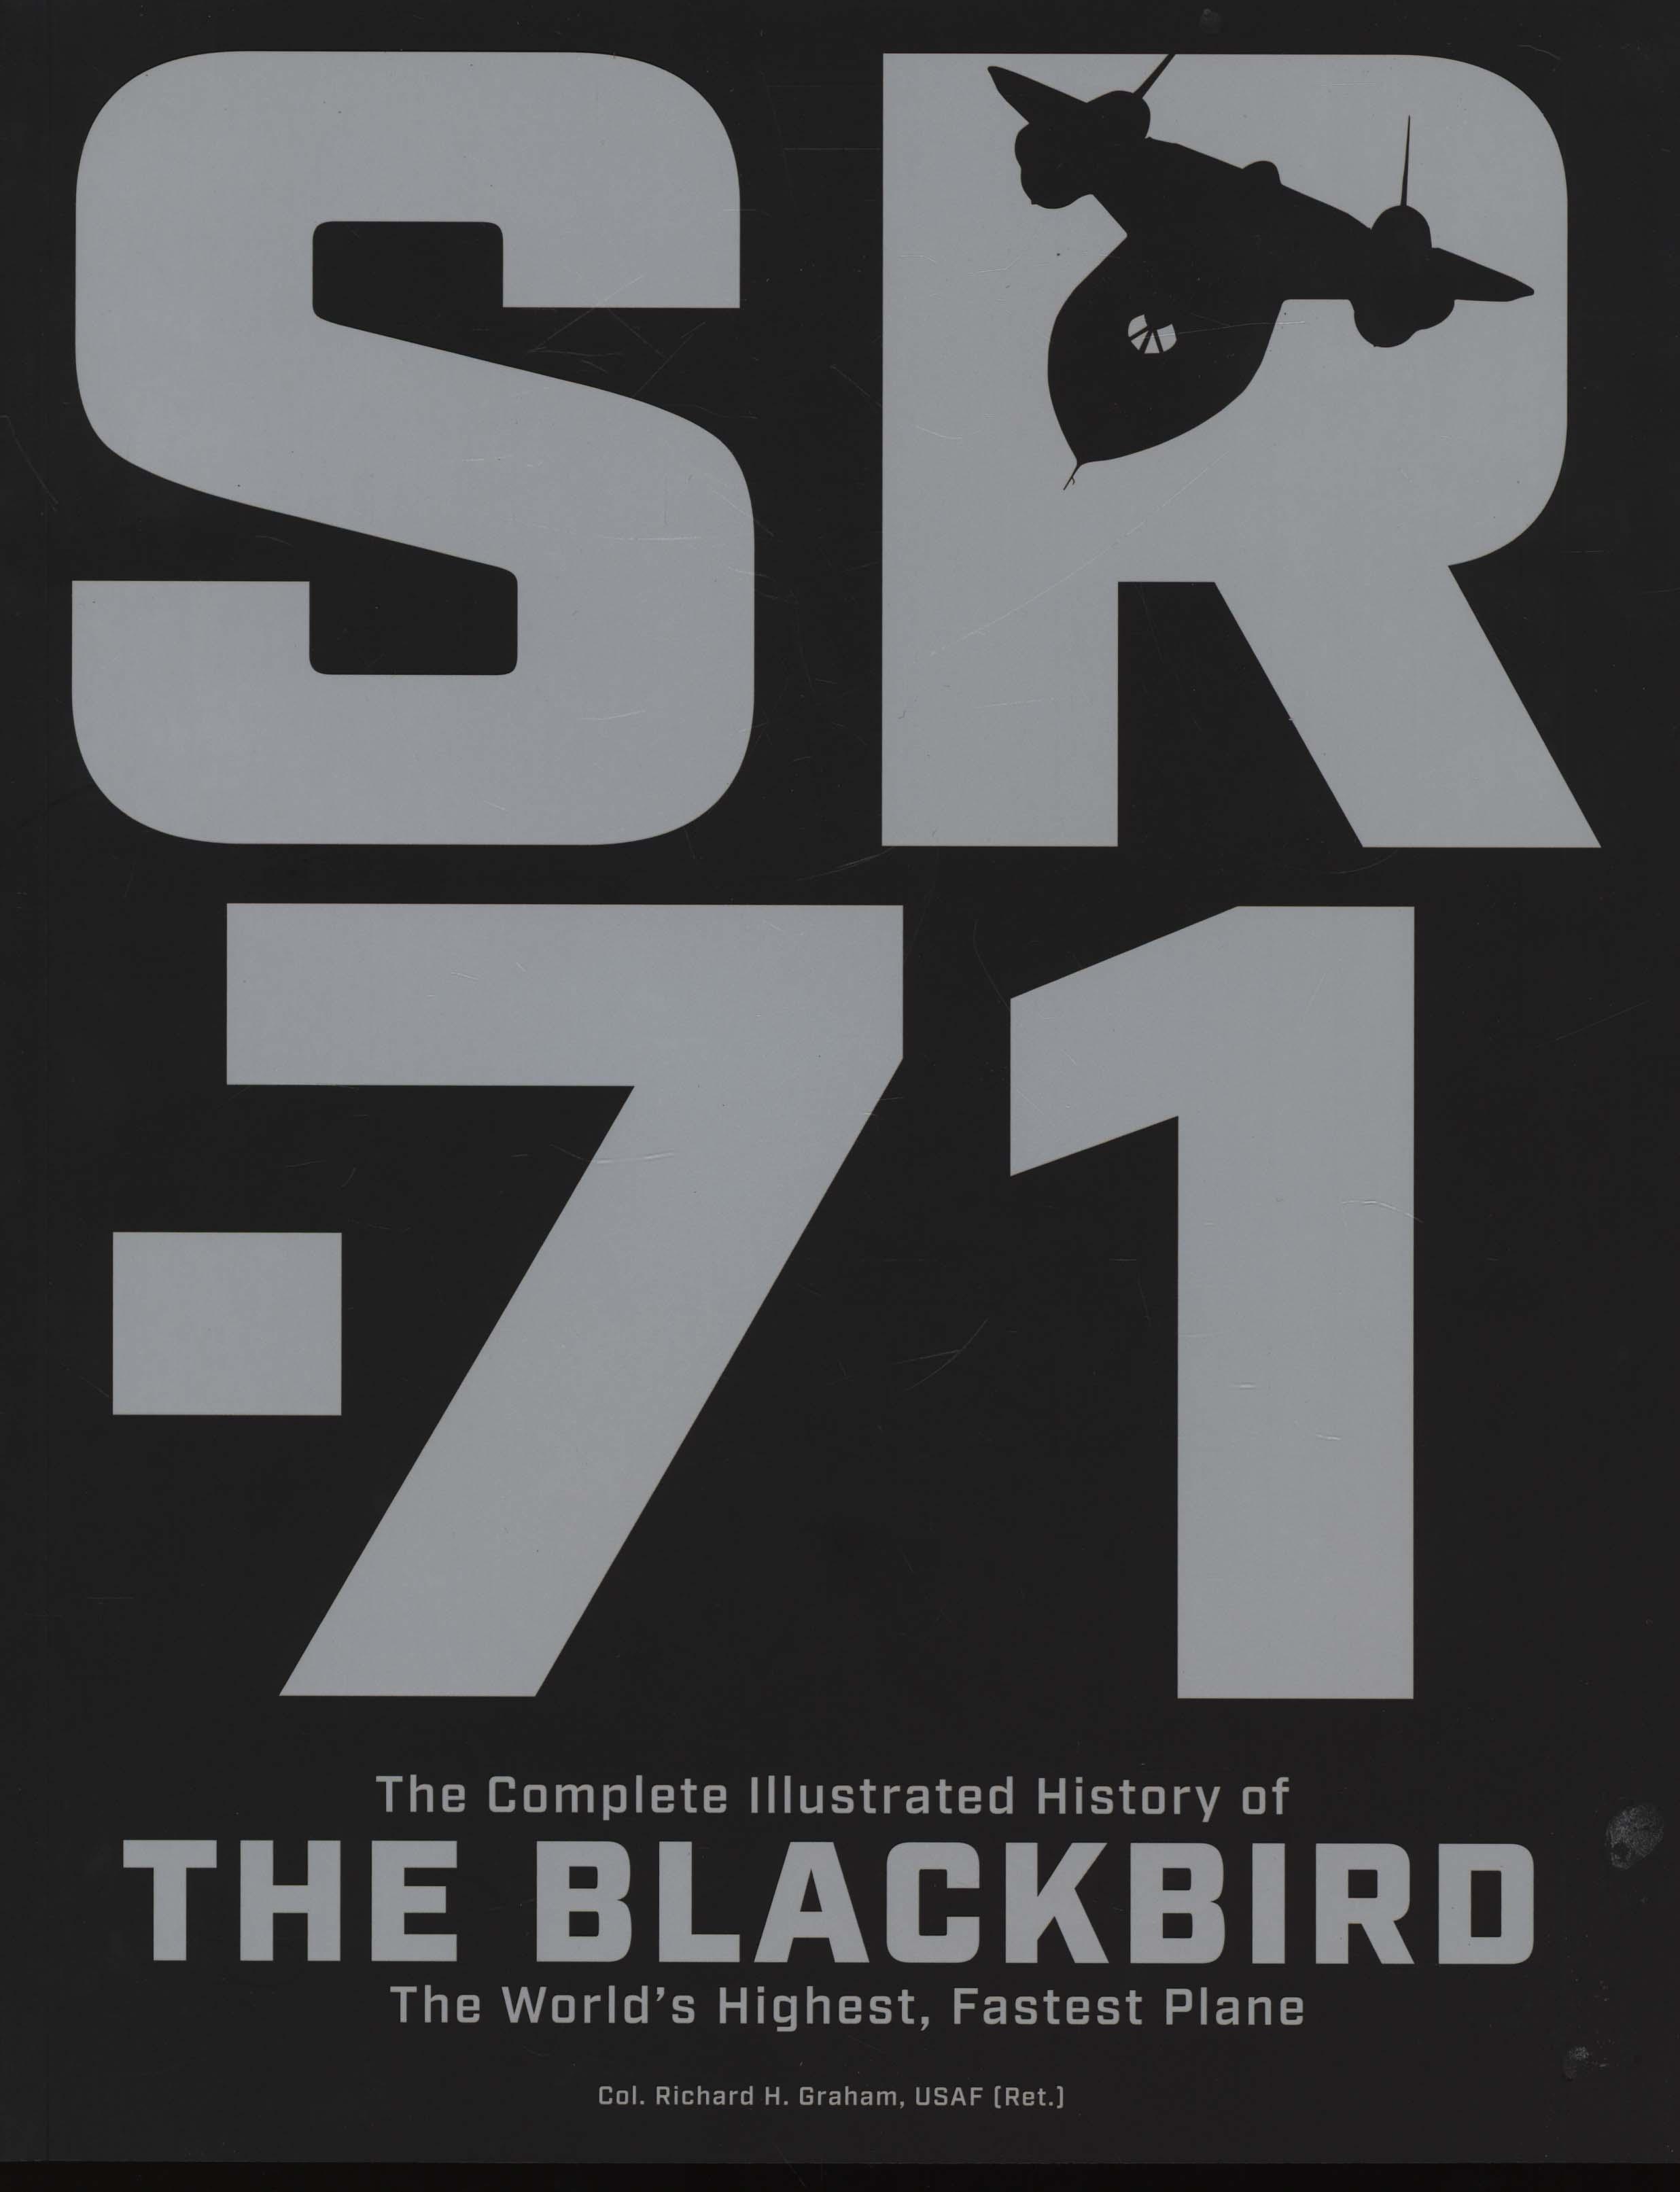 SR-71 - Richard Graham